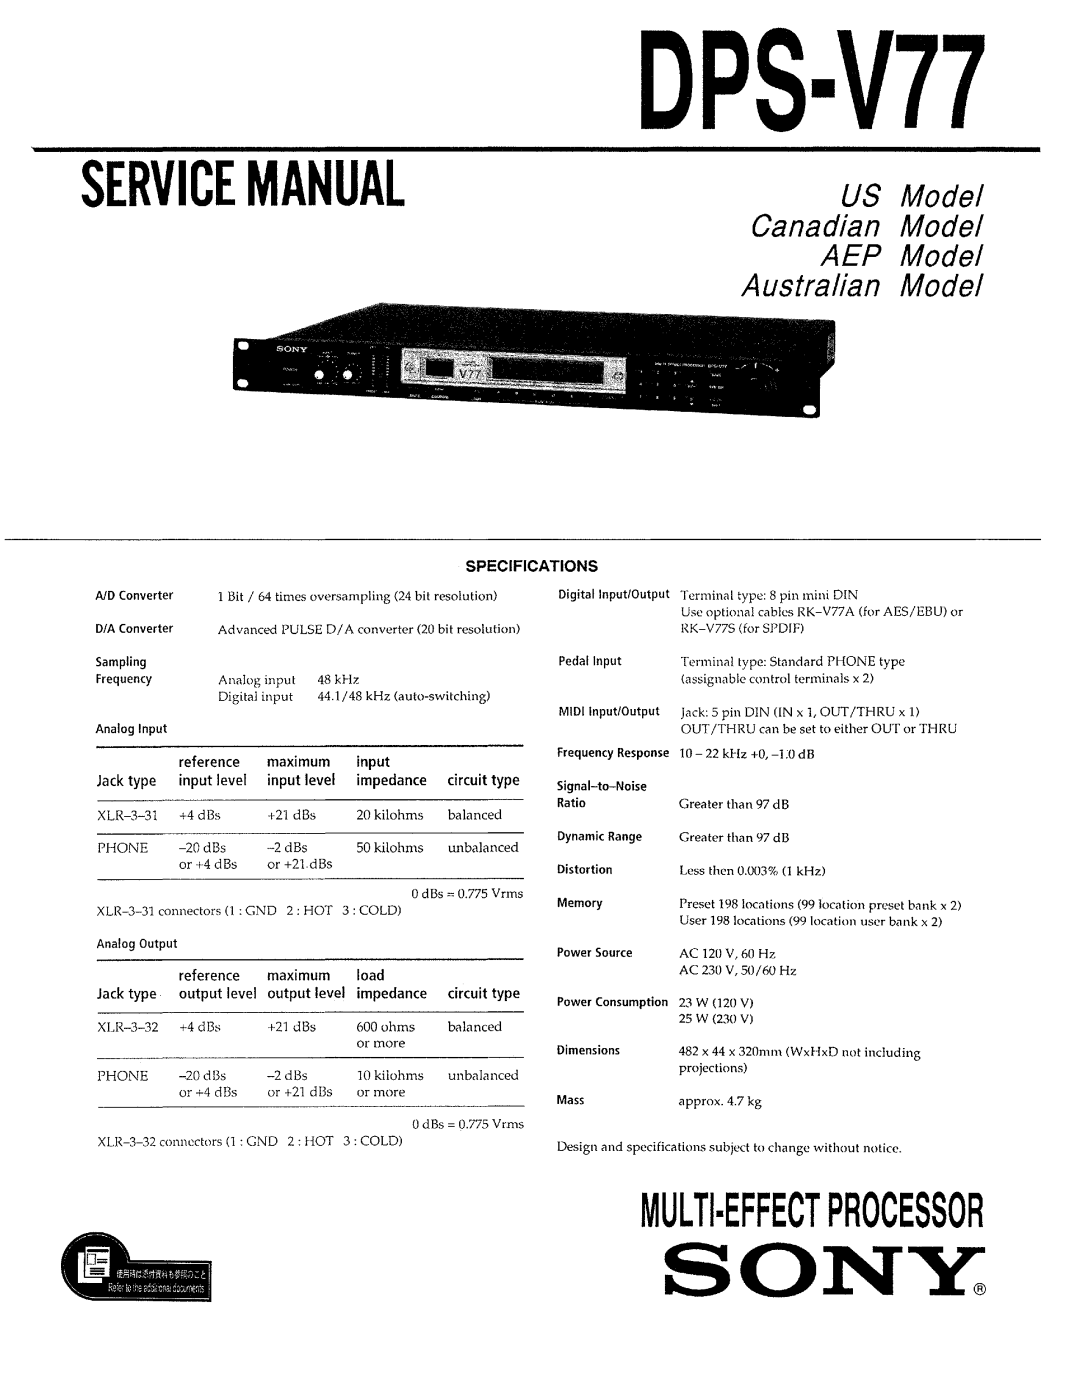 Sony DPS-V77 service manual Multi·Effect Processor, Sony, Service Manual 